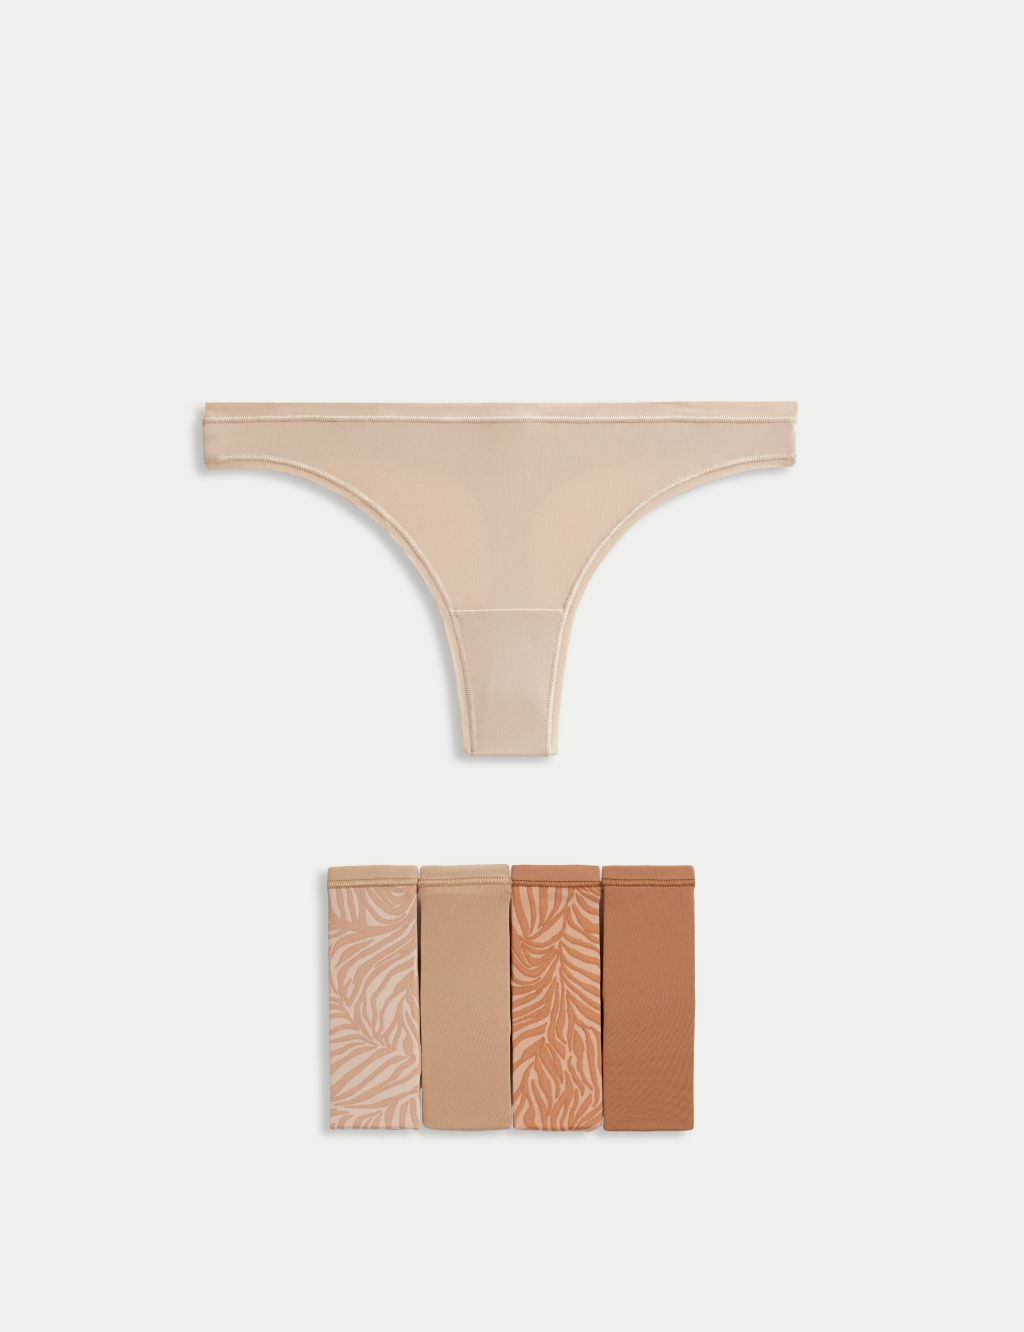 BNWT M&S Body Lingerie Nude ‘Rose Quartz’ Full Cup Bra Size 42E